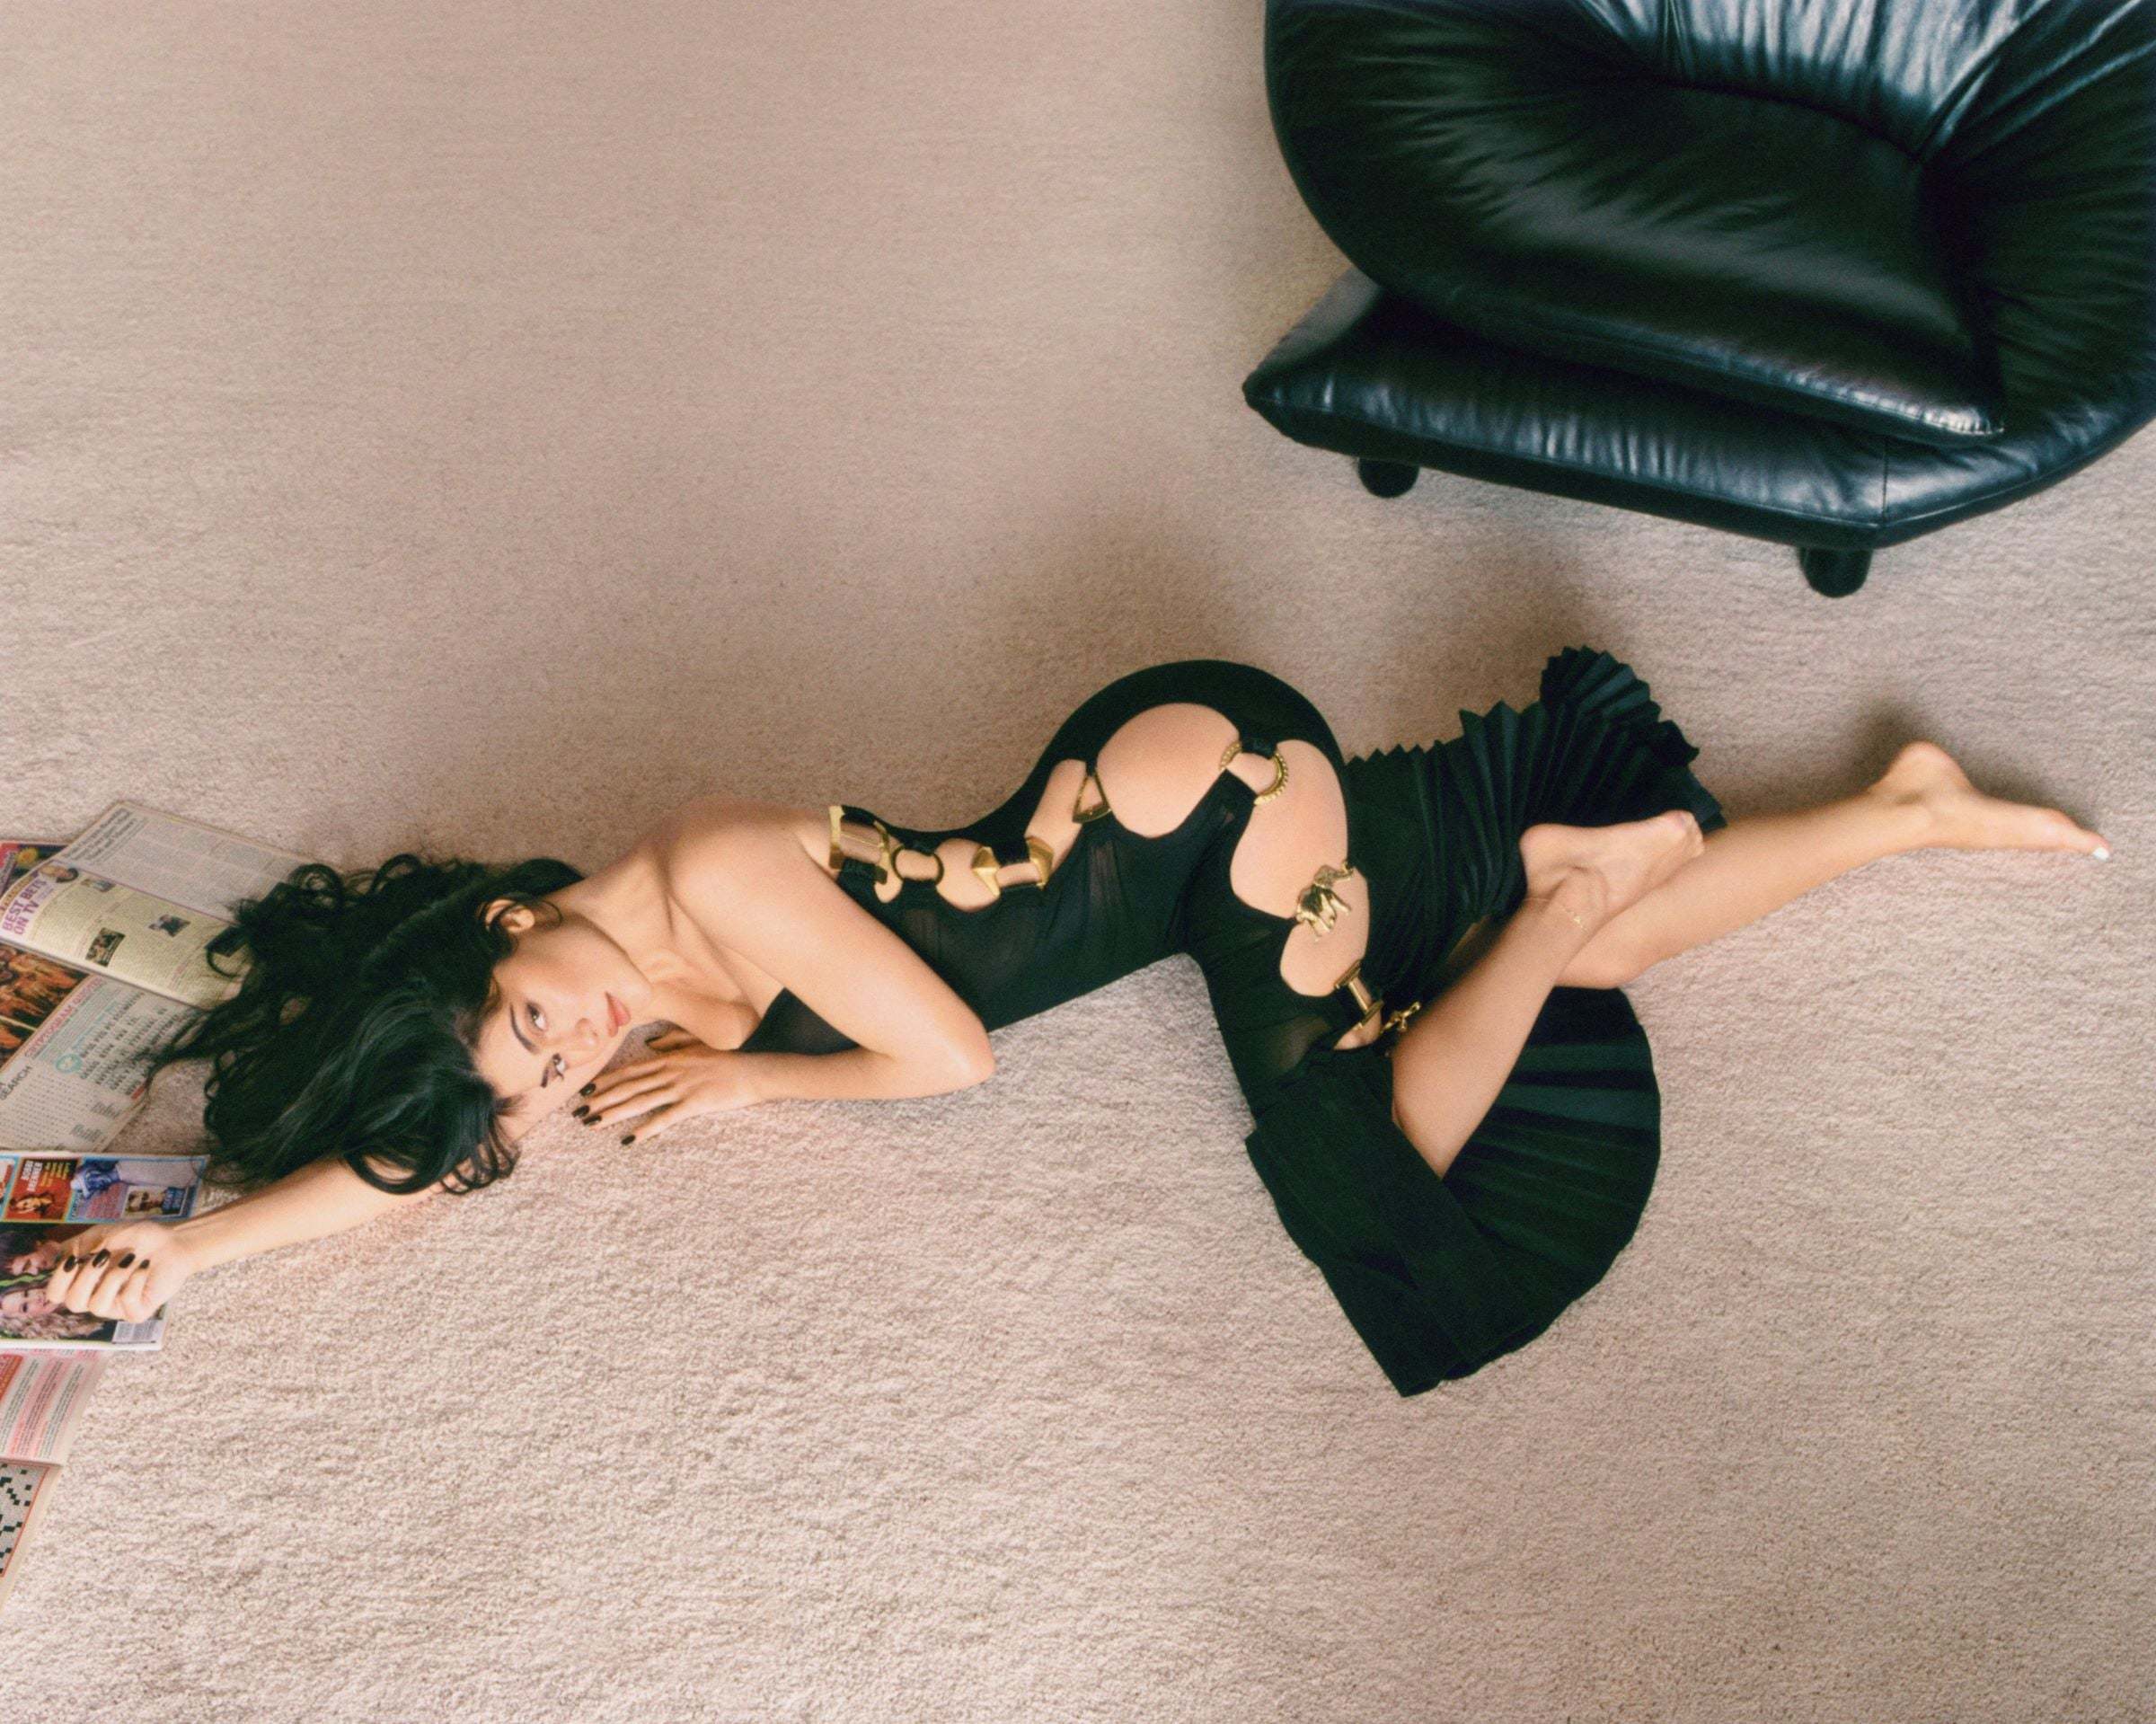 Kylie Jenner's Feet in Slides 2 Insta Story 04-29-2020 : r/CelebrityFeet